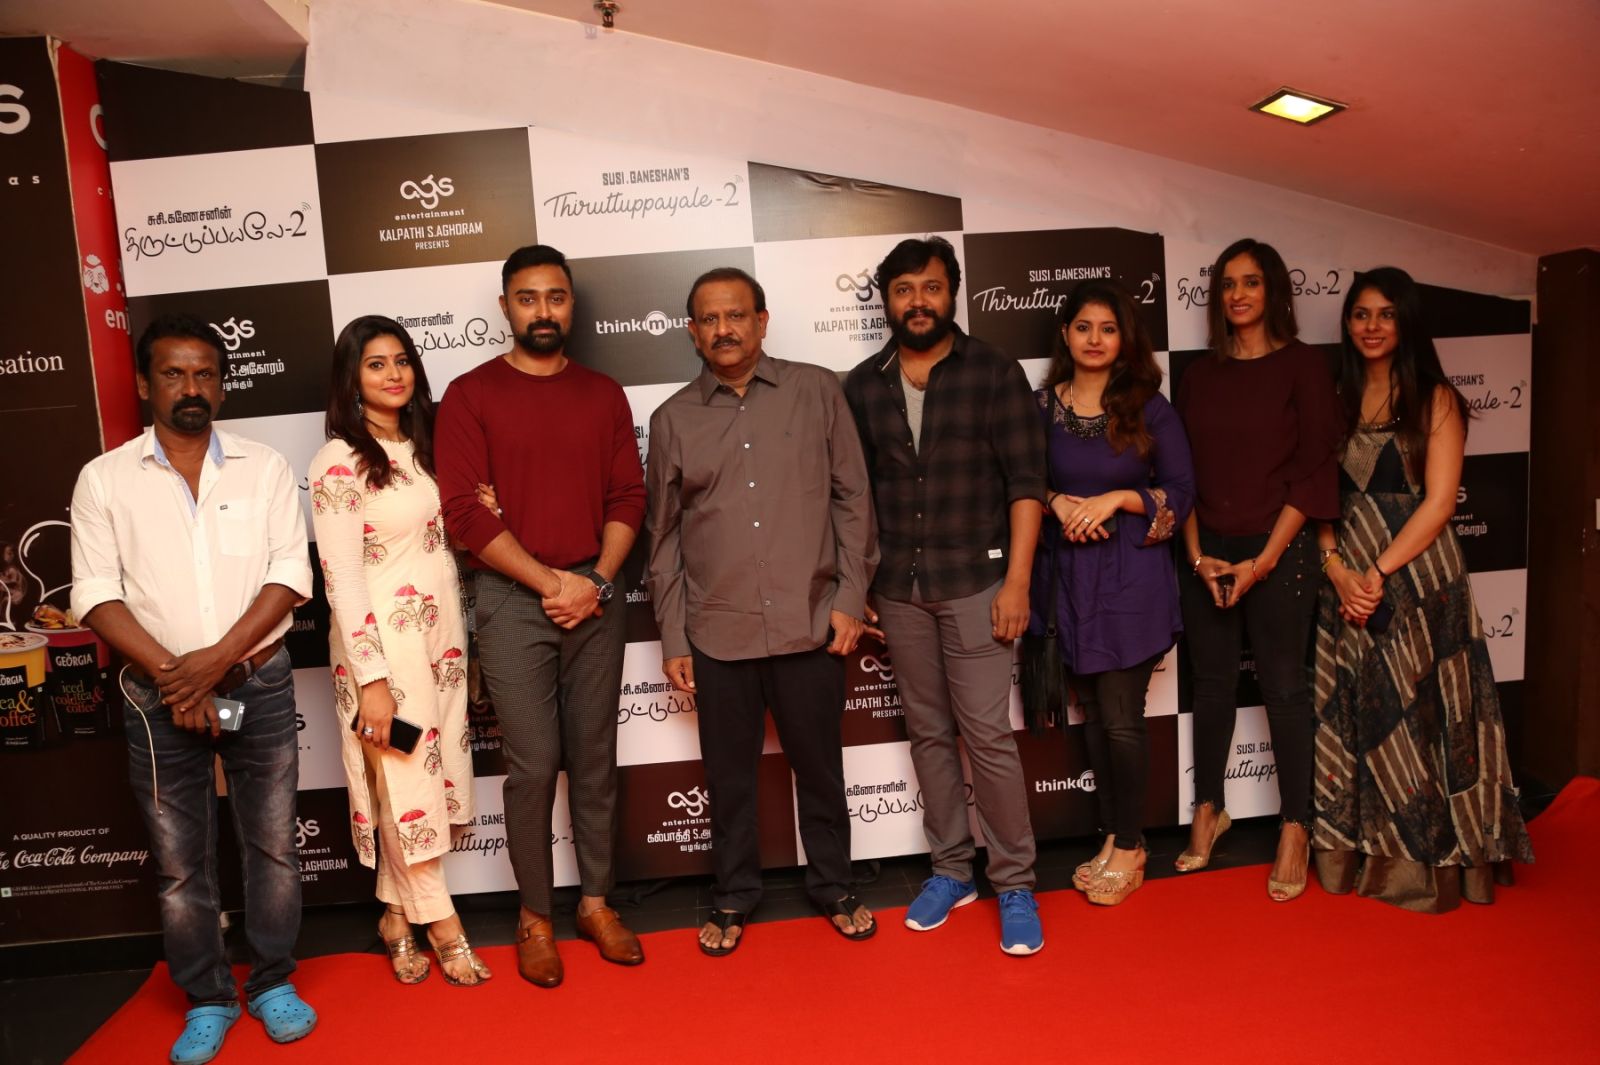 Thiruttuppayale 2 Red Carpet Premiere Show Stills (19)